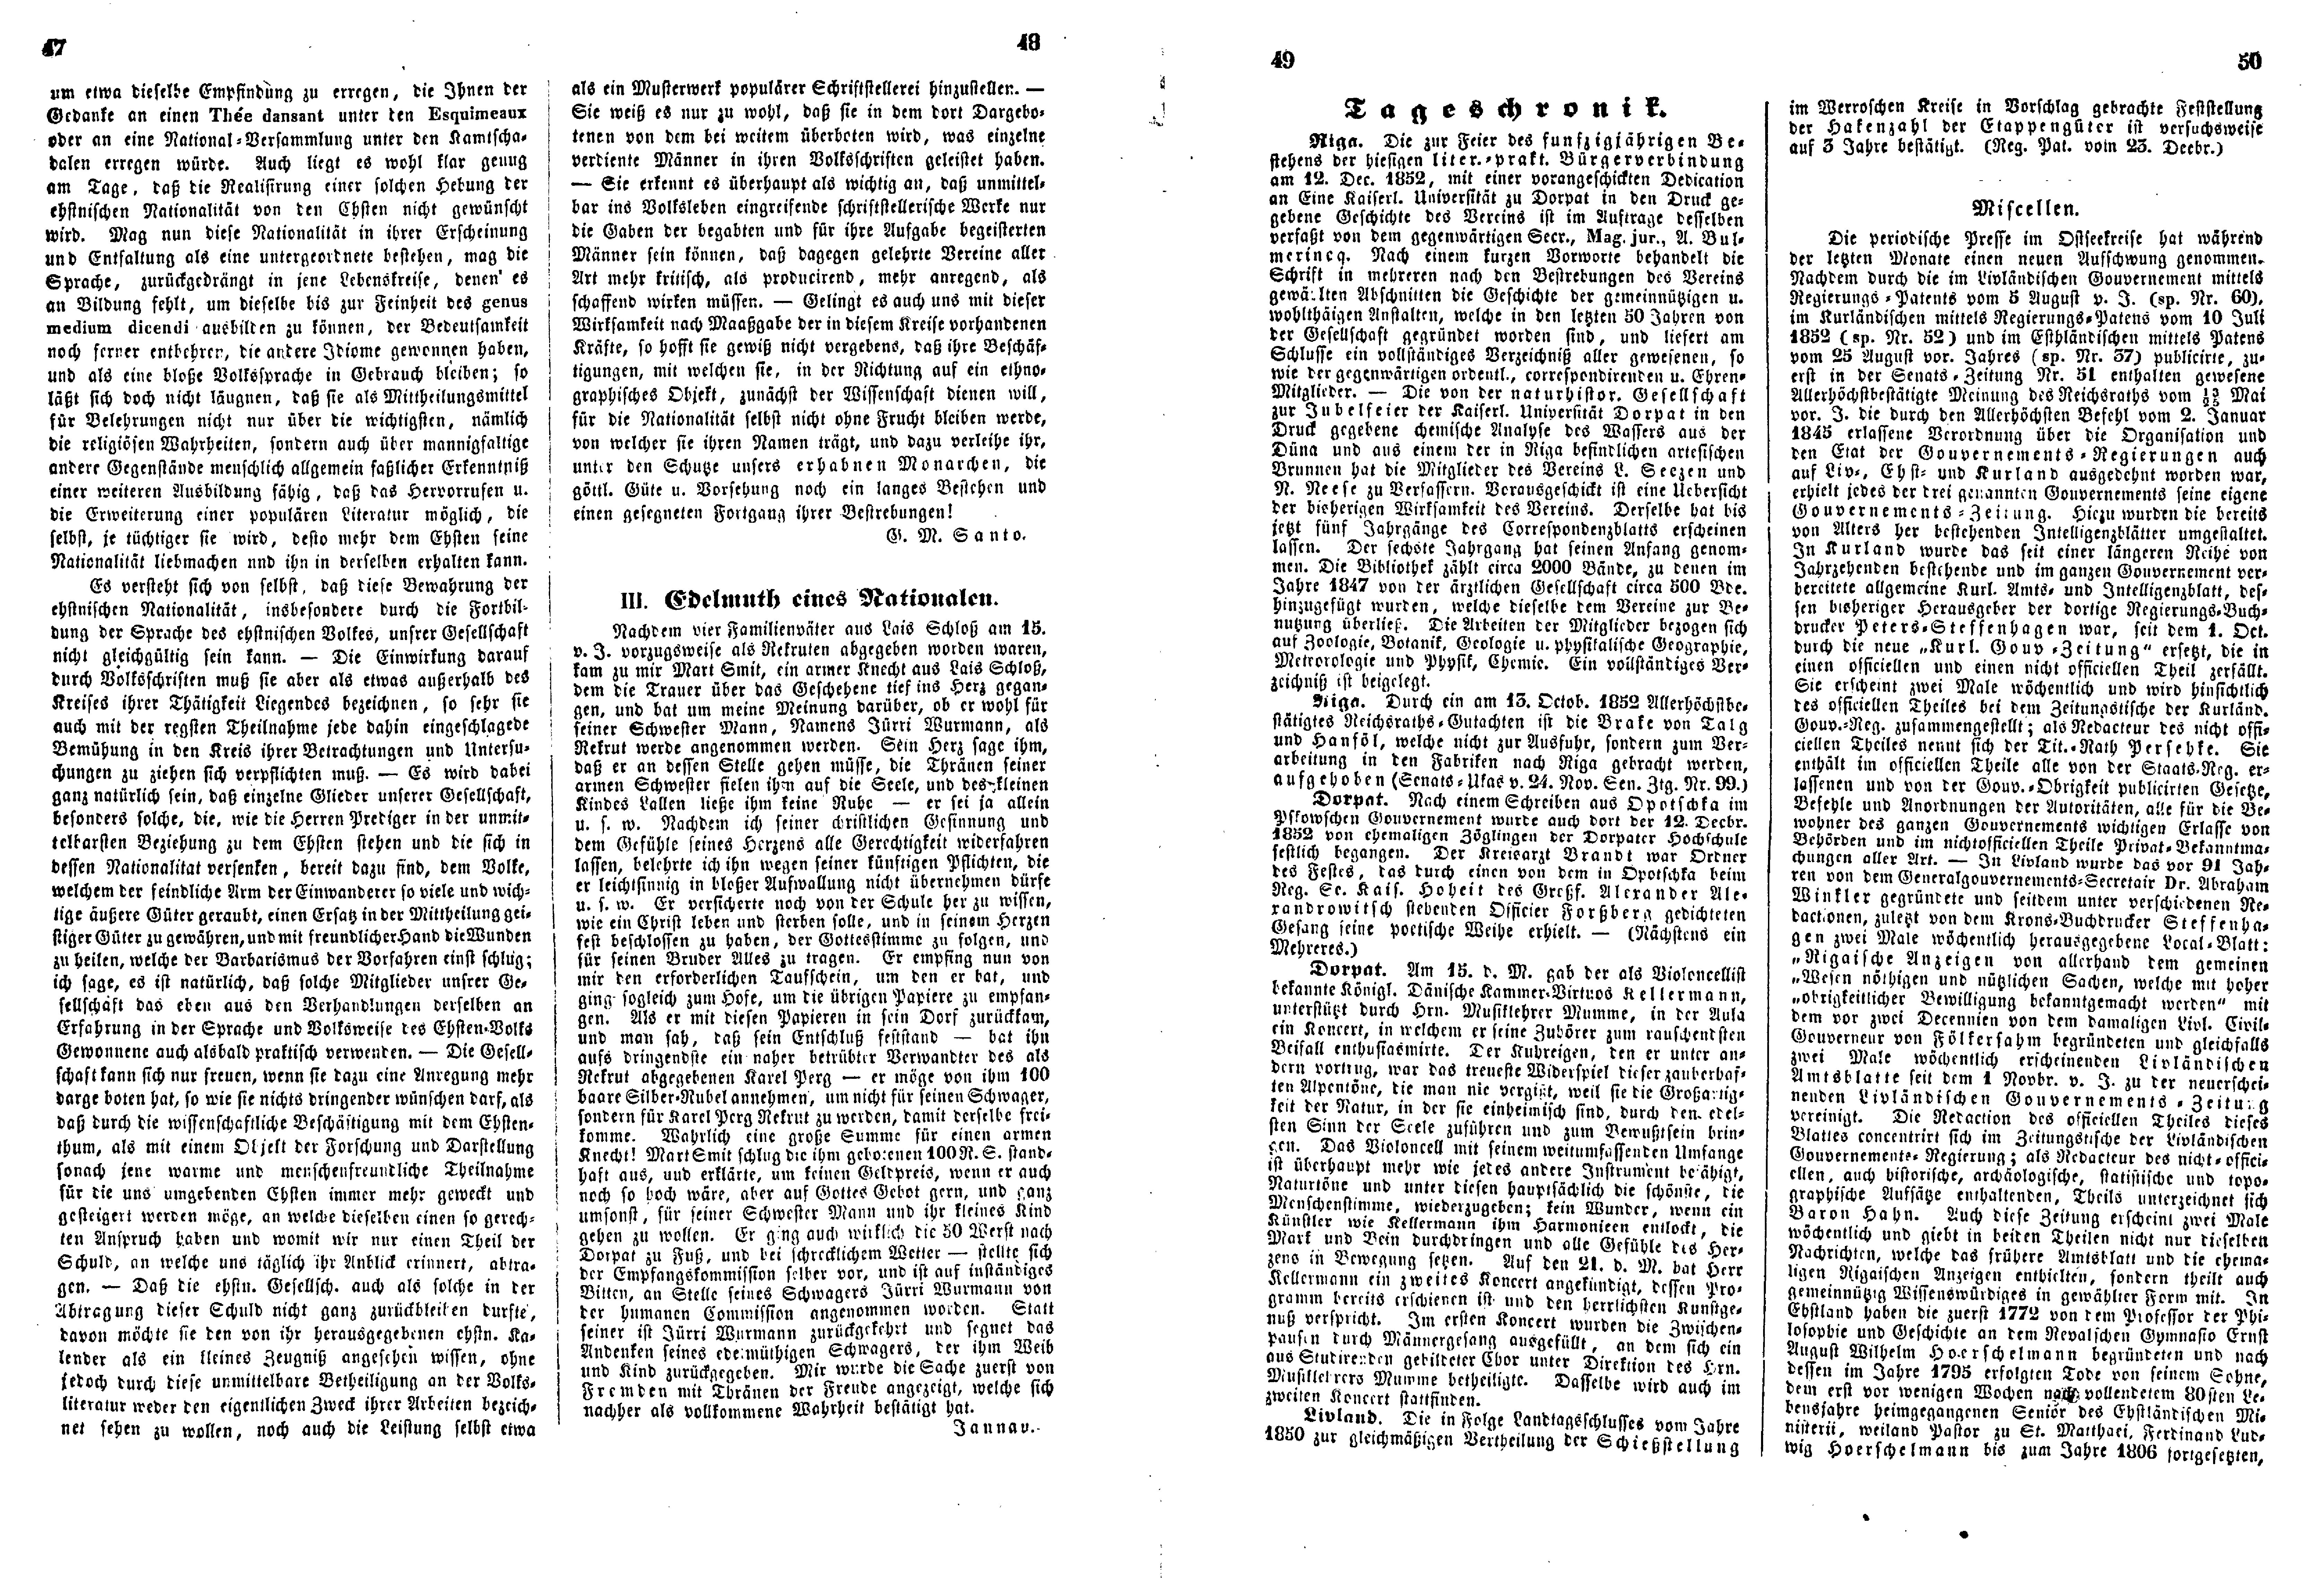 Das Inland [18] (1853) | 22. (47-50) Main body of text